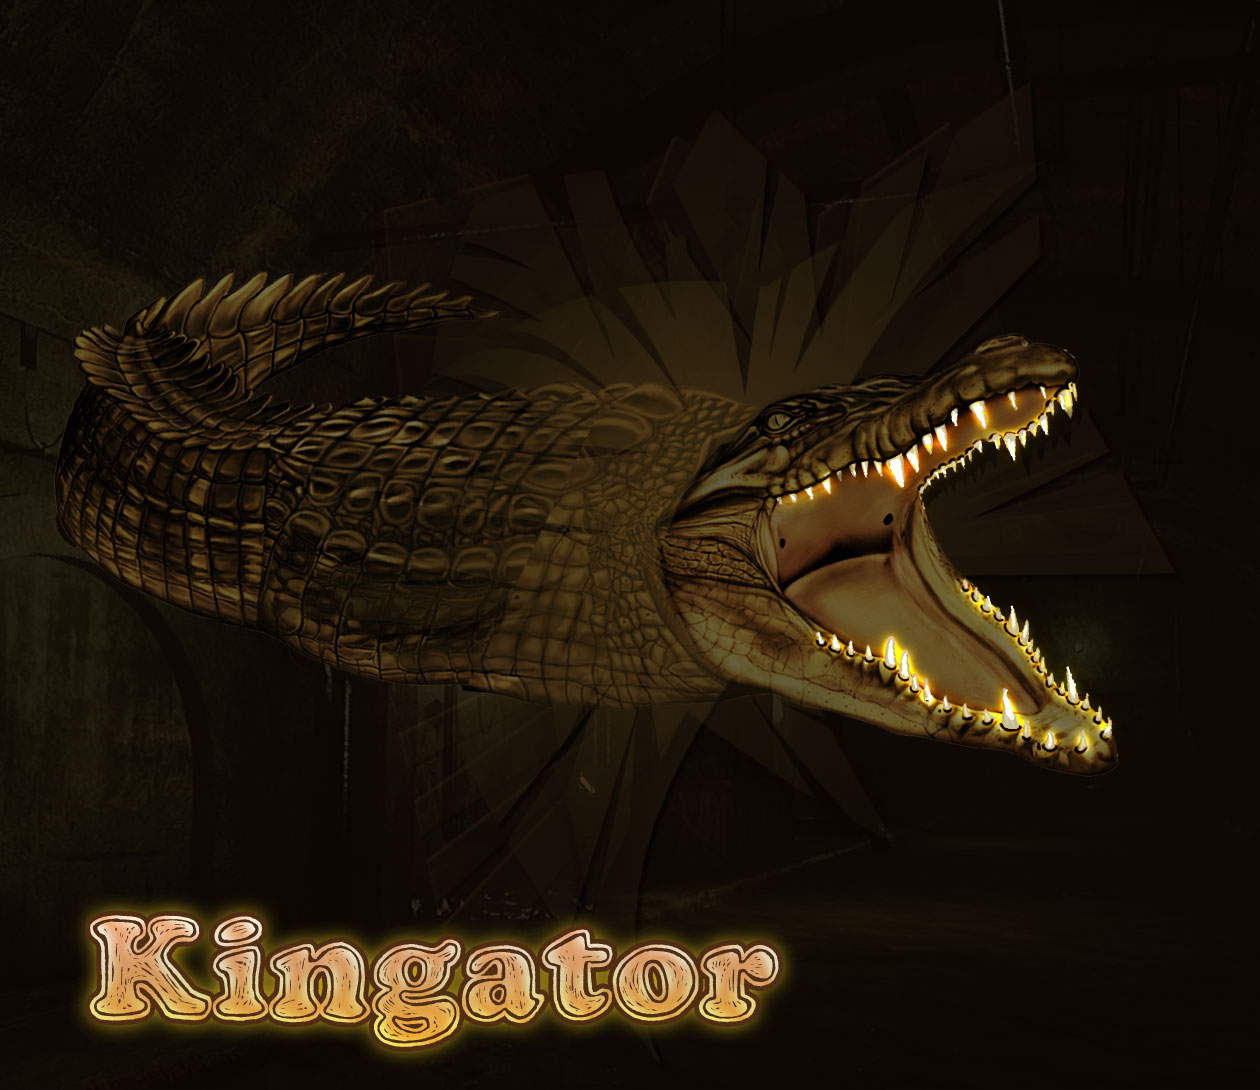 Kingator